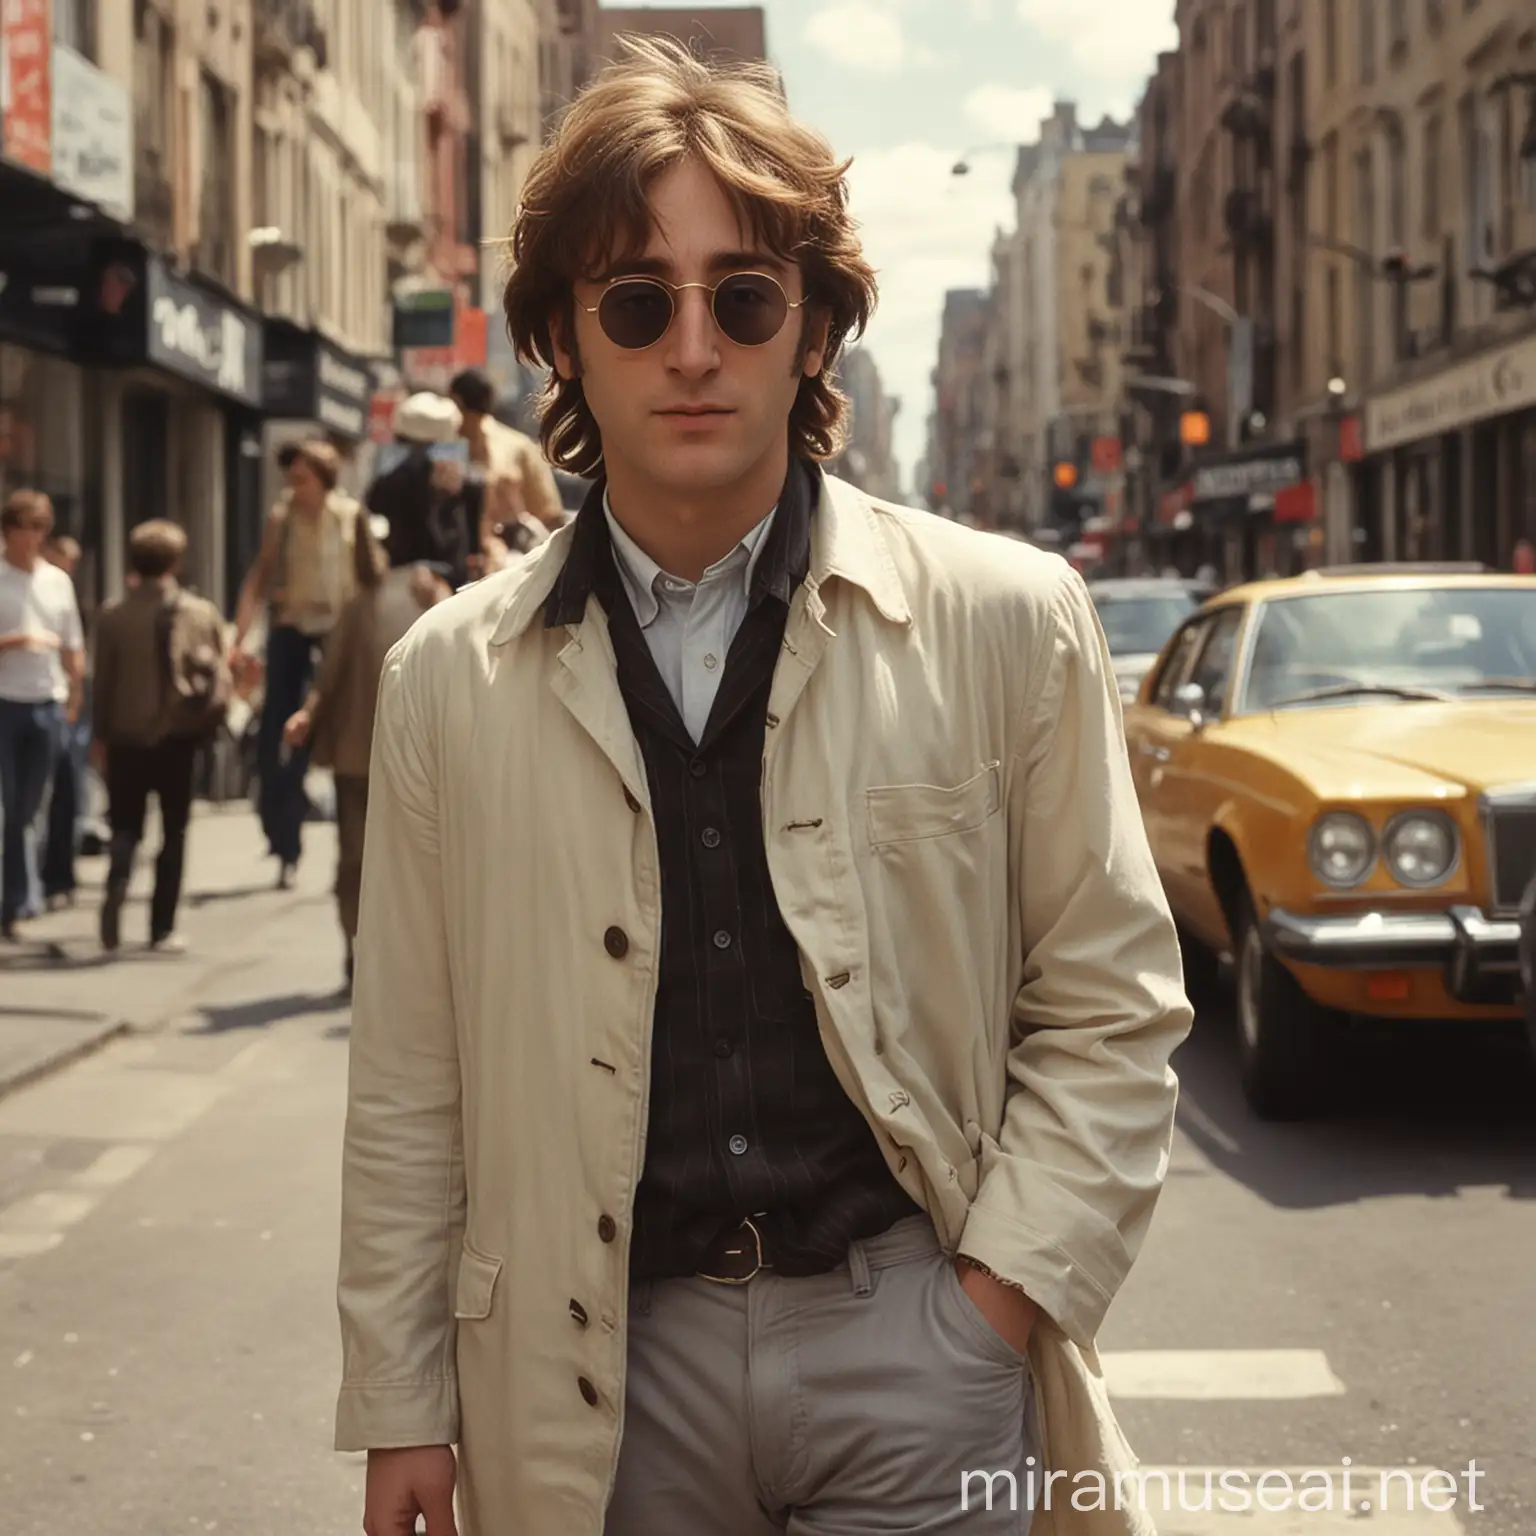 Young John Lennon today, John Lennon walking down the city streets, John wearing todays fashion, sunny outside, realistic, camera focused 